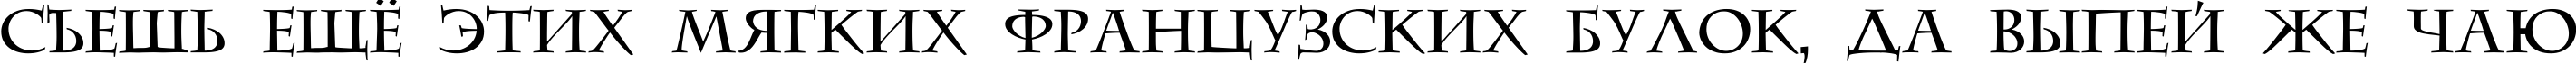 Пример написания шрифтом DS CenturyCapitals текста на русском